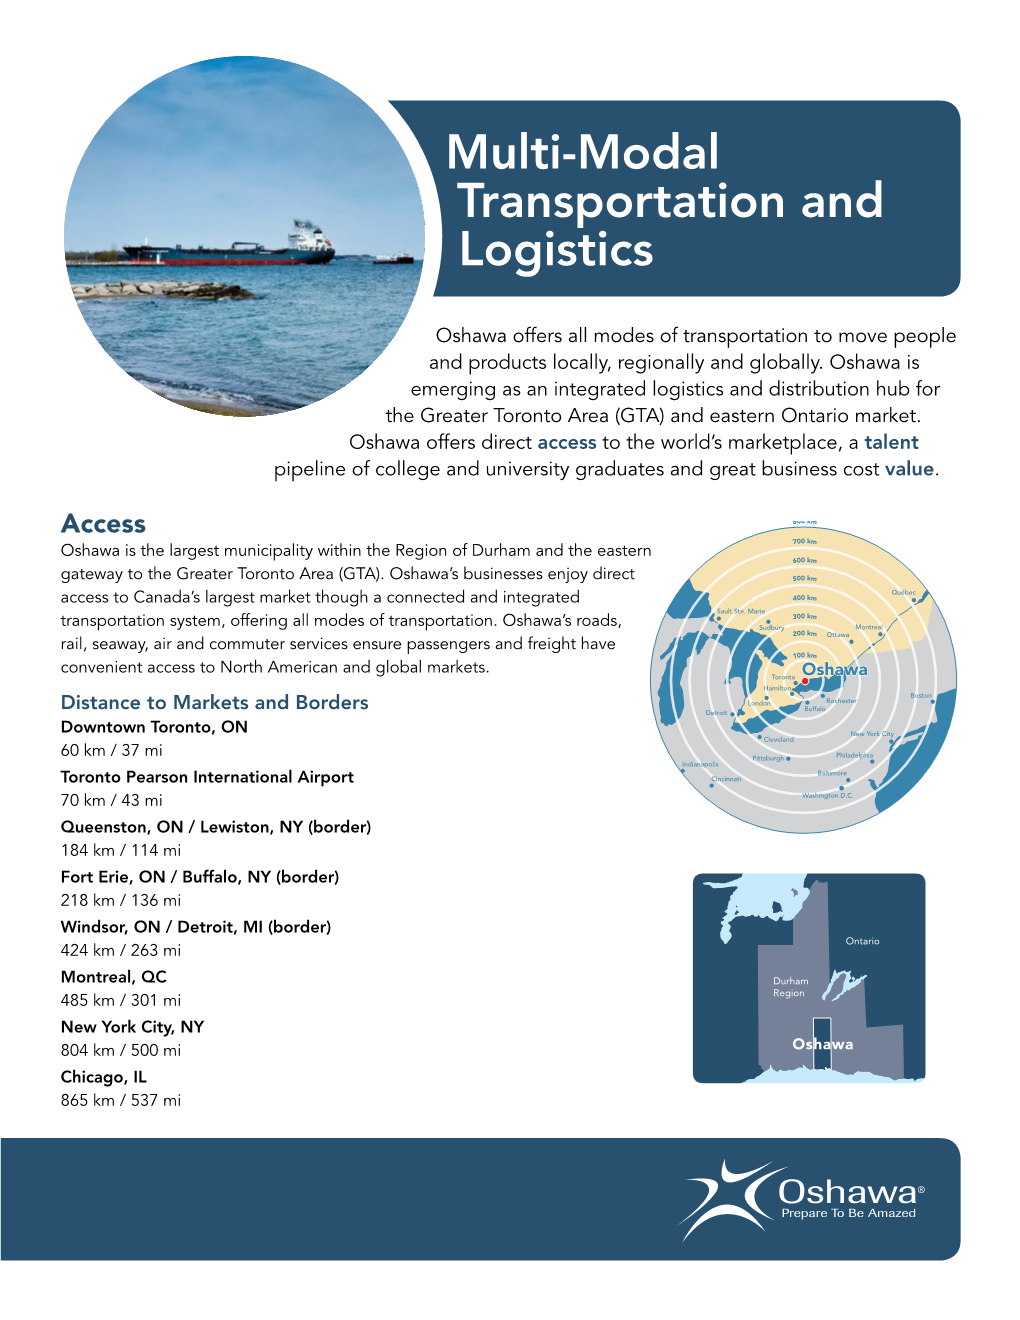 Multi-Modal Transportation and Logistics Sector Profile